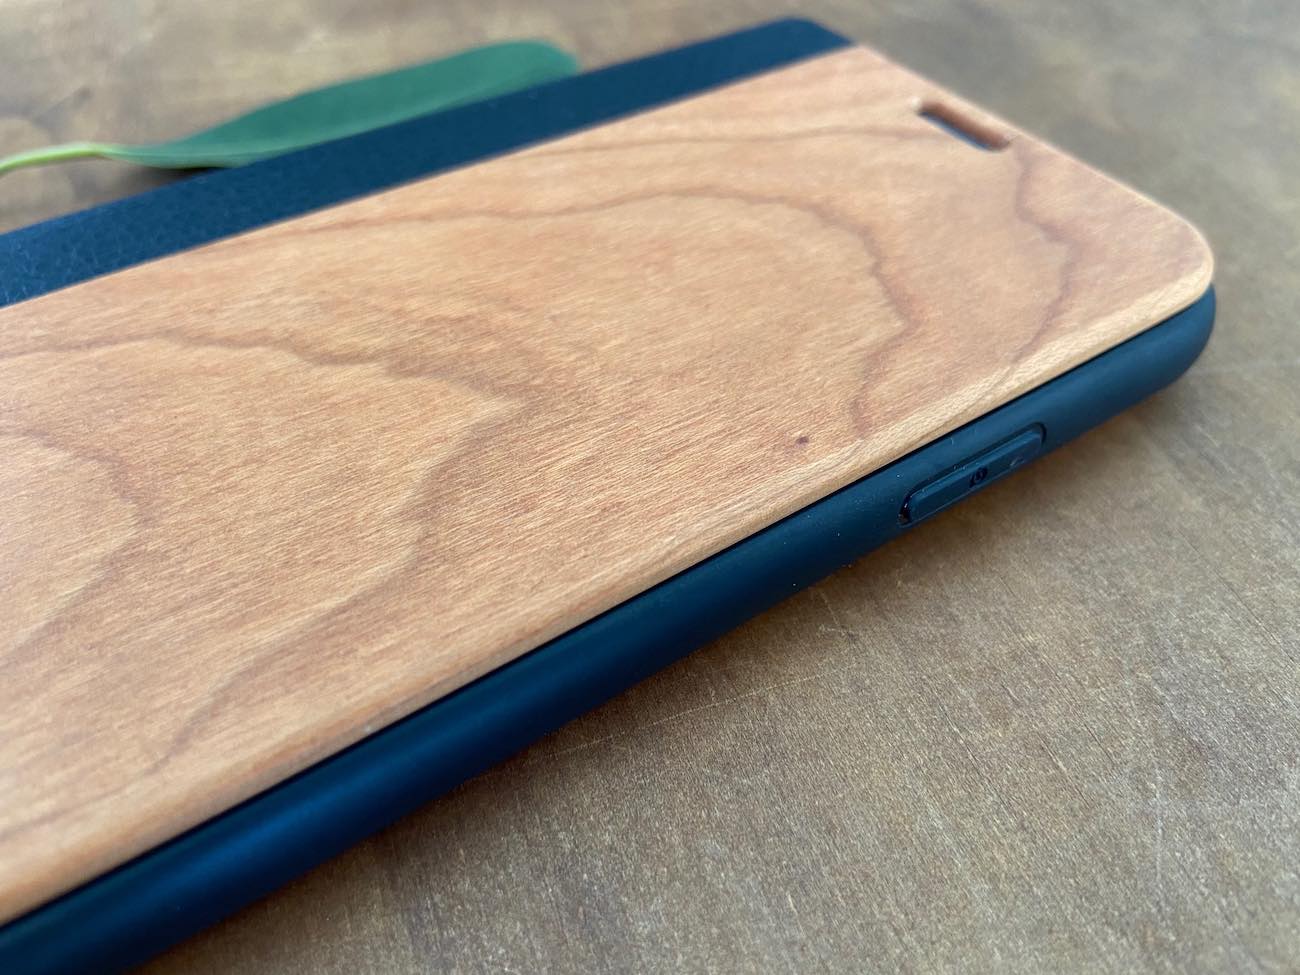 Cherry wood phone wallet case